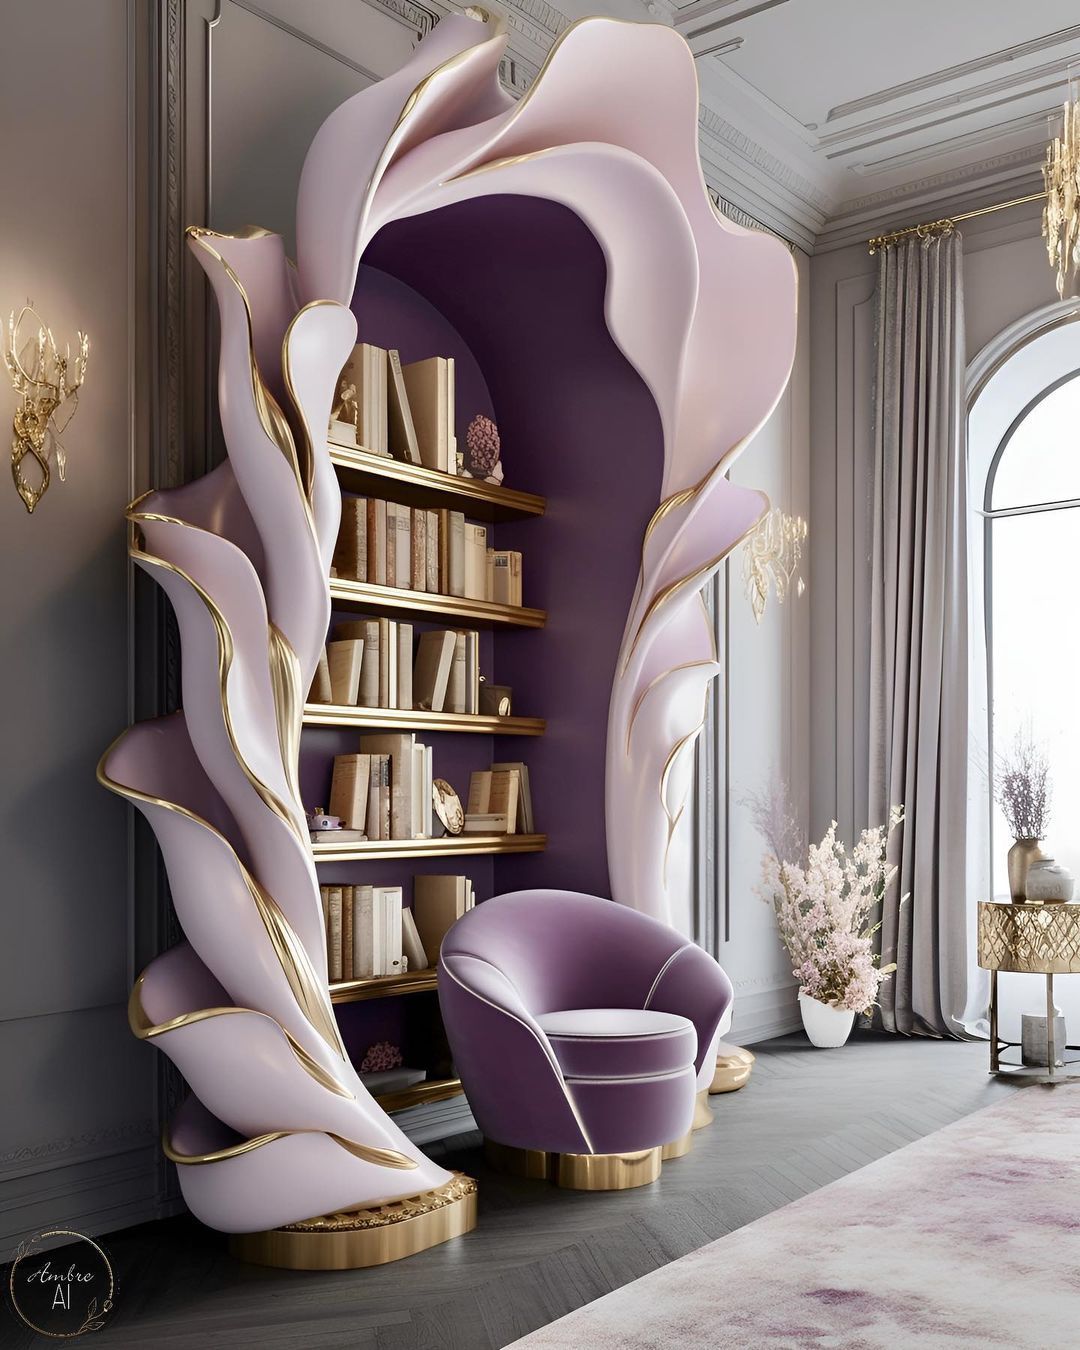 Making Elegant Bookshelf Designs